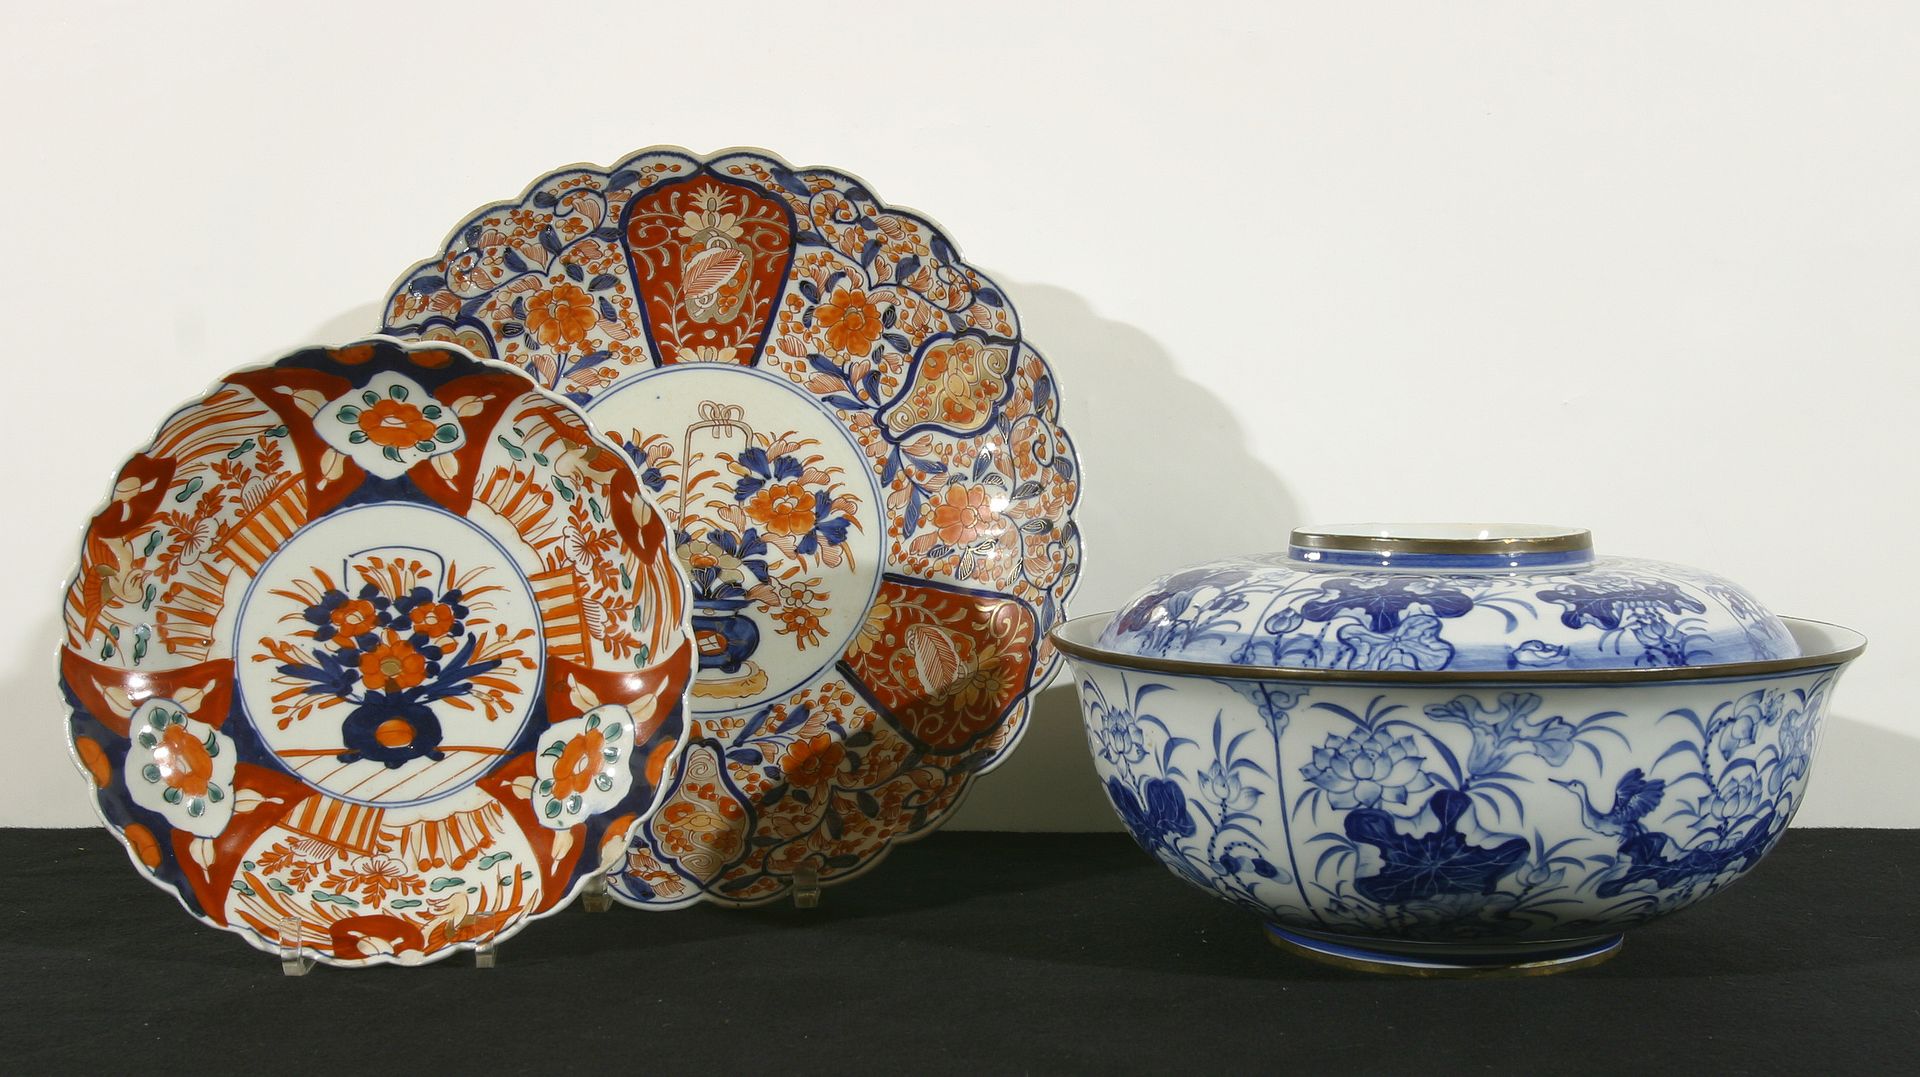 VARIA 1887-1972 瓷器套装。一个中国青花瓷花瓶。两个带有伊万里珐琅装饰的瓷盘
Lot porselein。一辆蓝色的卡车。两条门廊边的伊玛瑞装饰
&hellip;